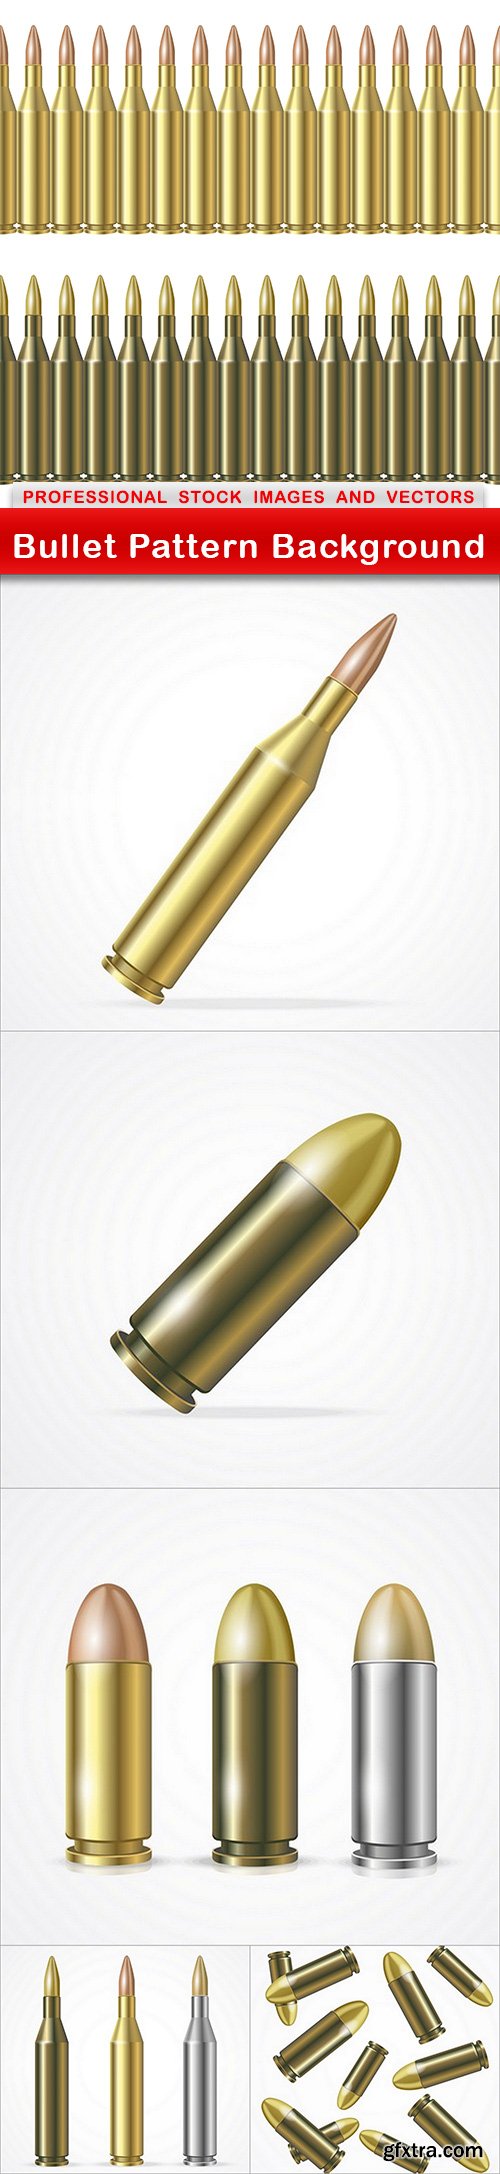 Bullet Pattern Background - 6 EPS